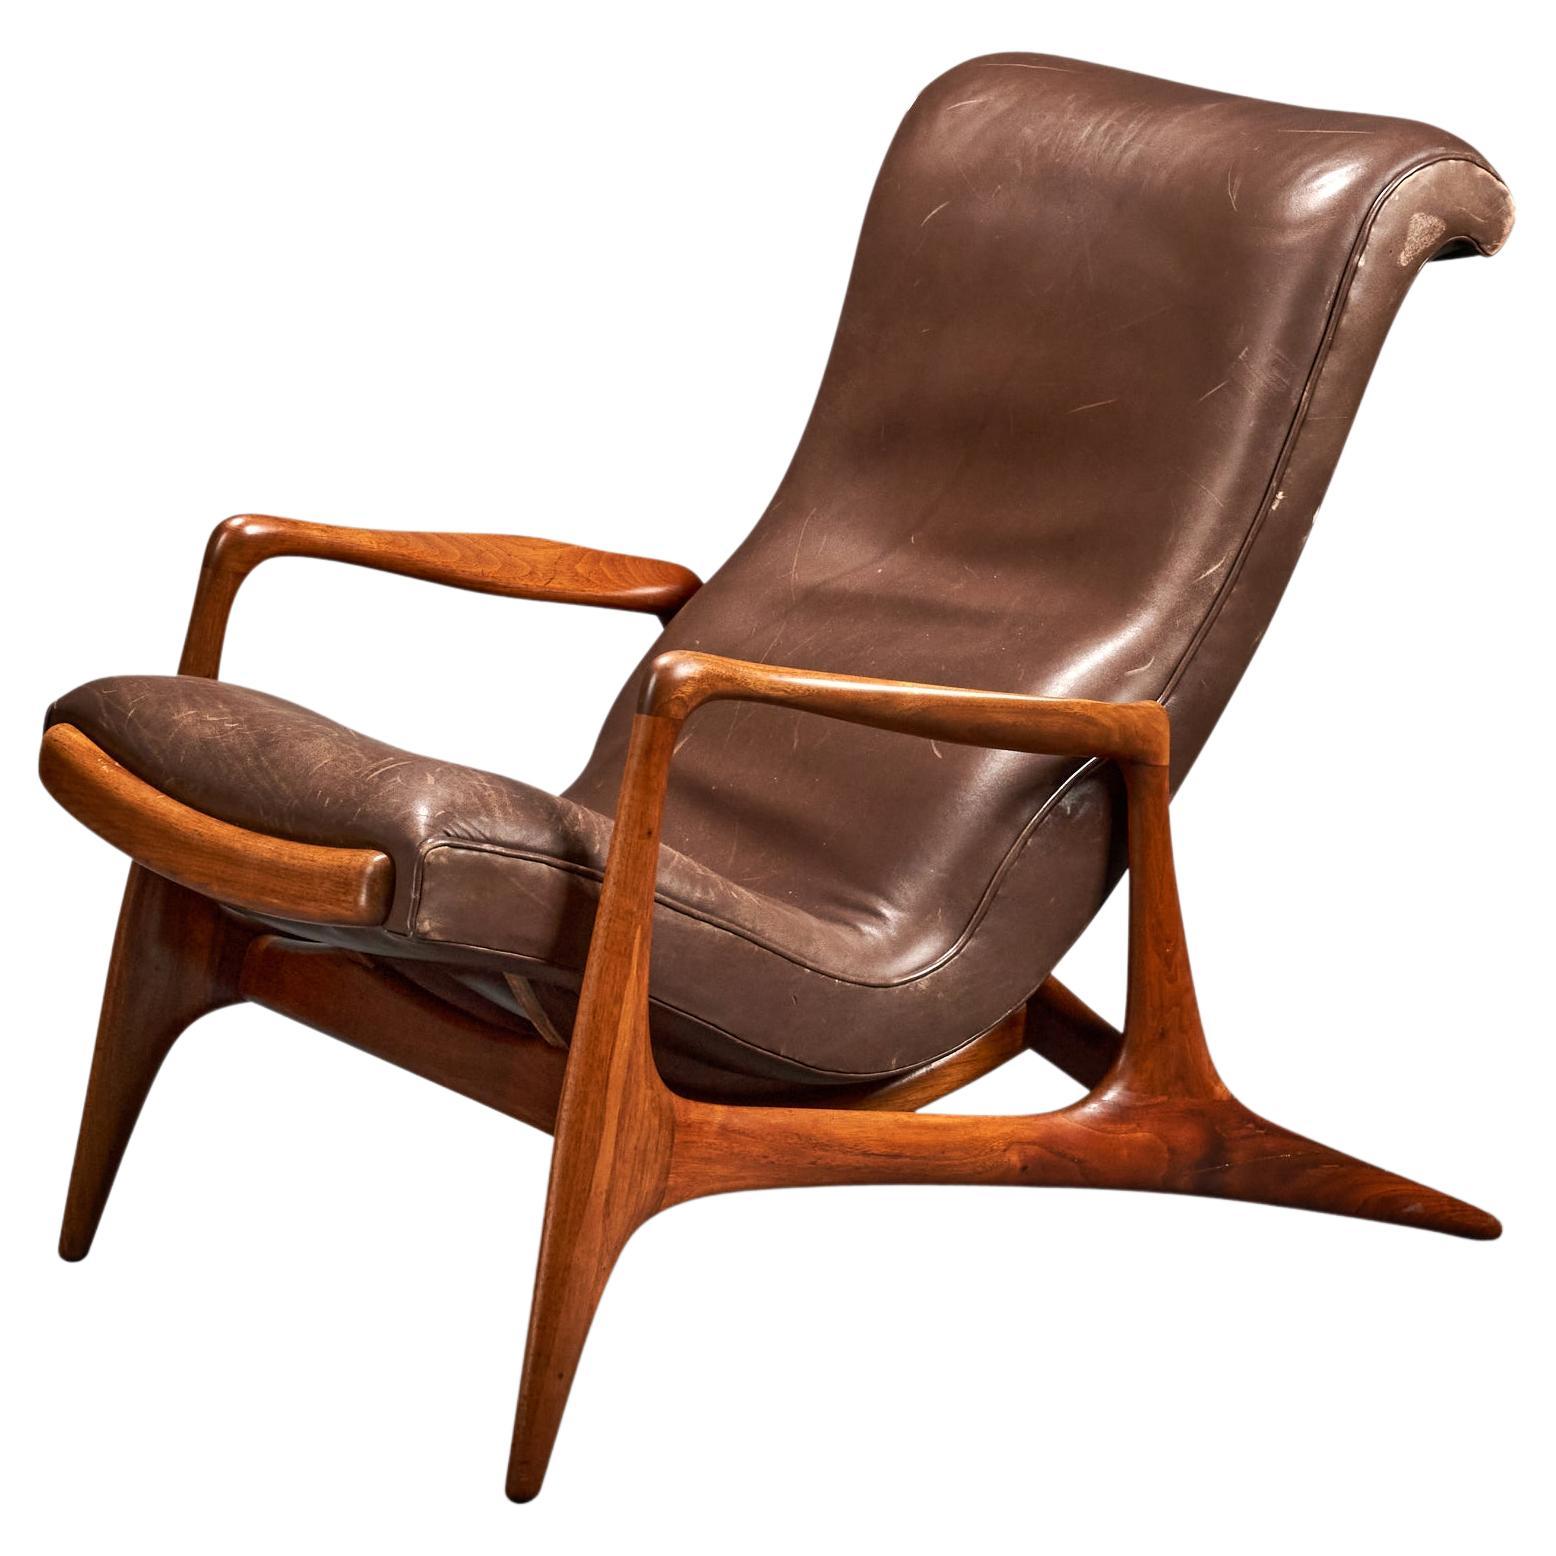 Vladimir Kagan, Lounge Chair, Leather, Walnut, Kagan-Dreyfuss, Inc, USA, 1956